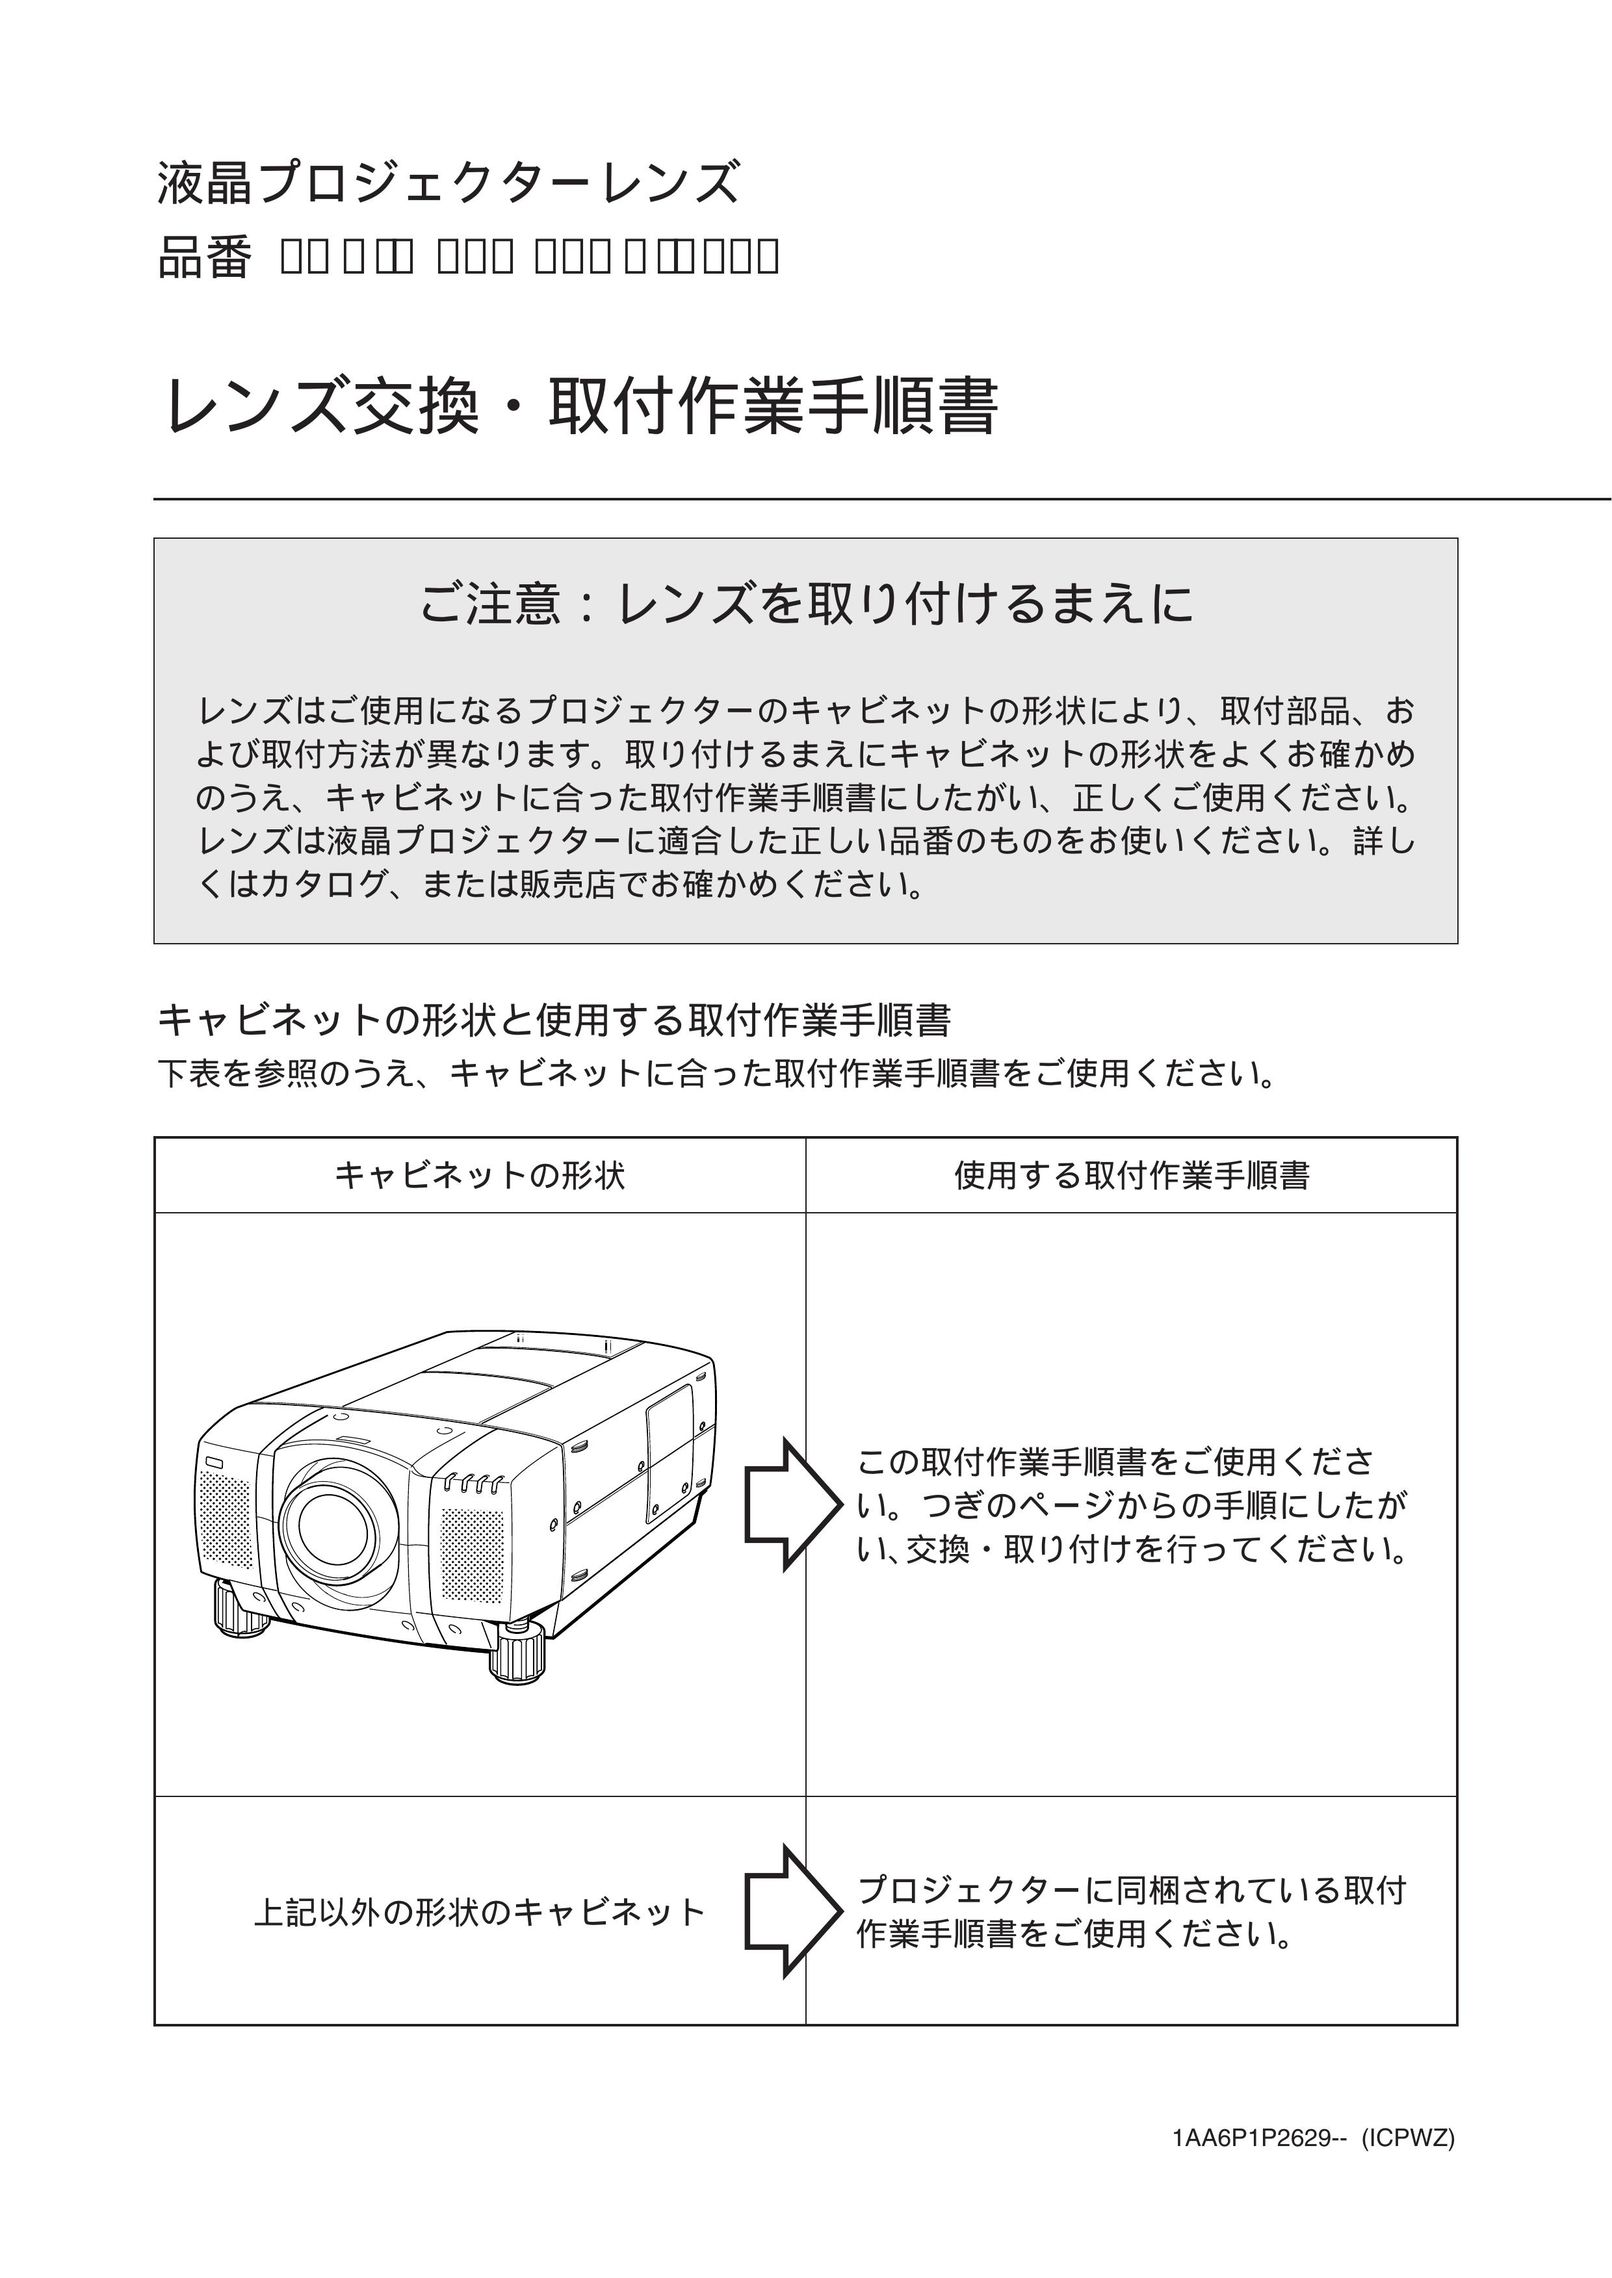 Fisher LNS-T01Z Projector User Manual